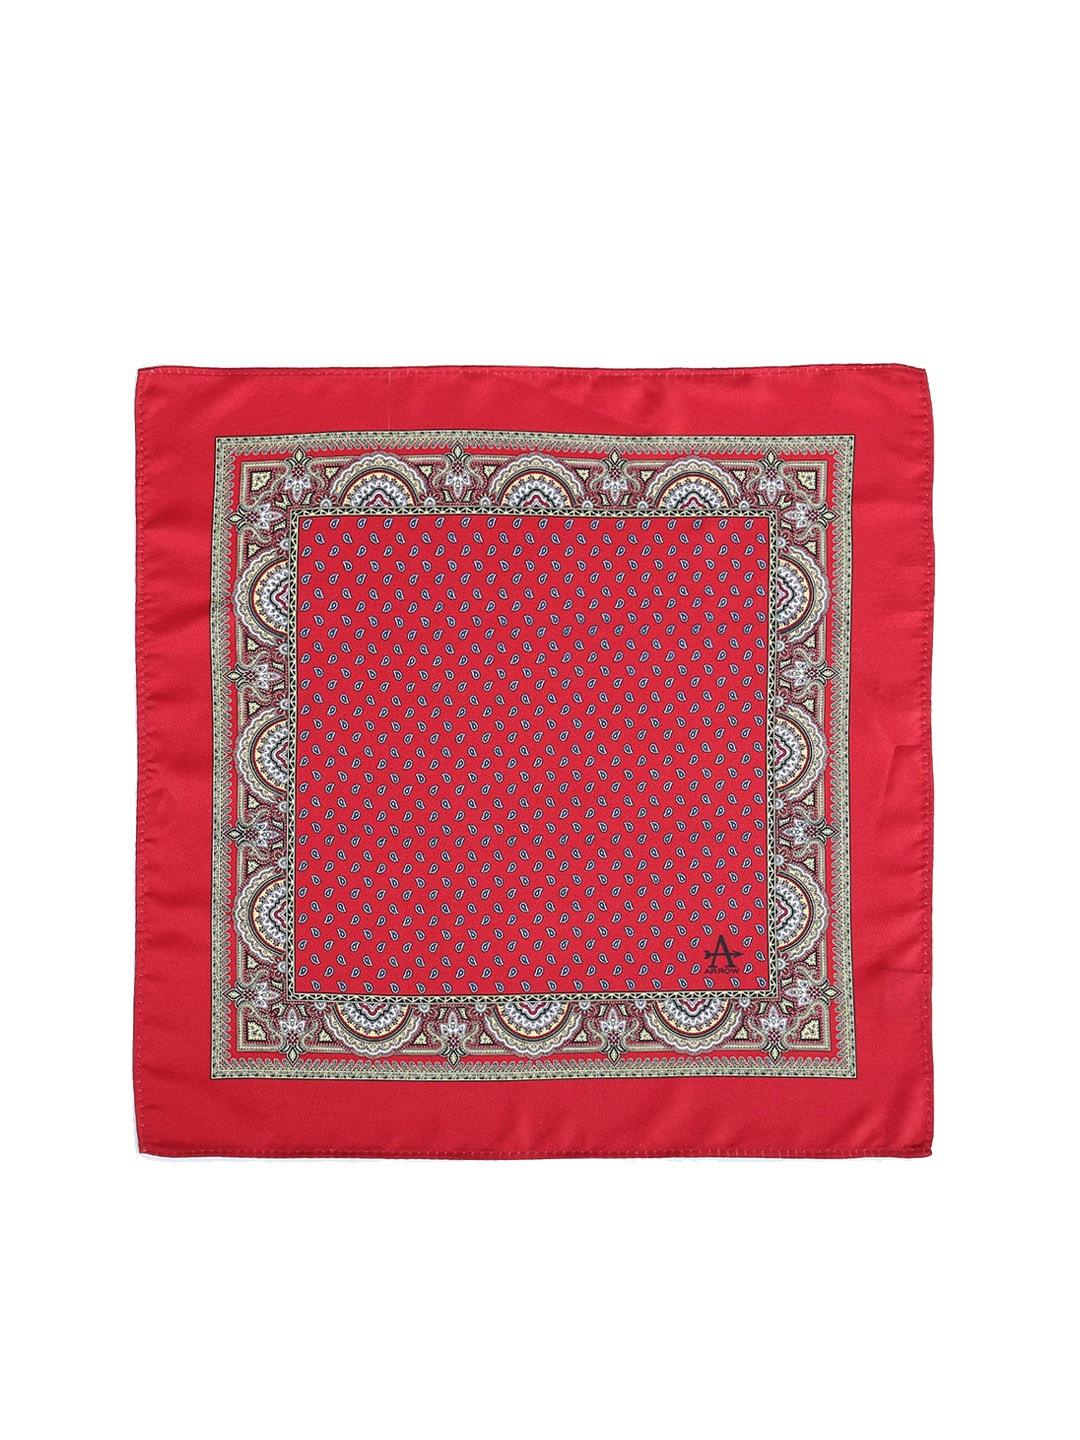 arrow-ethnic-motifs-printed-pocket-square